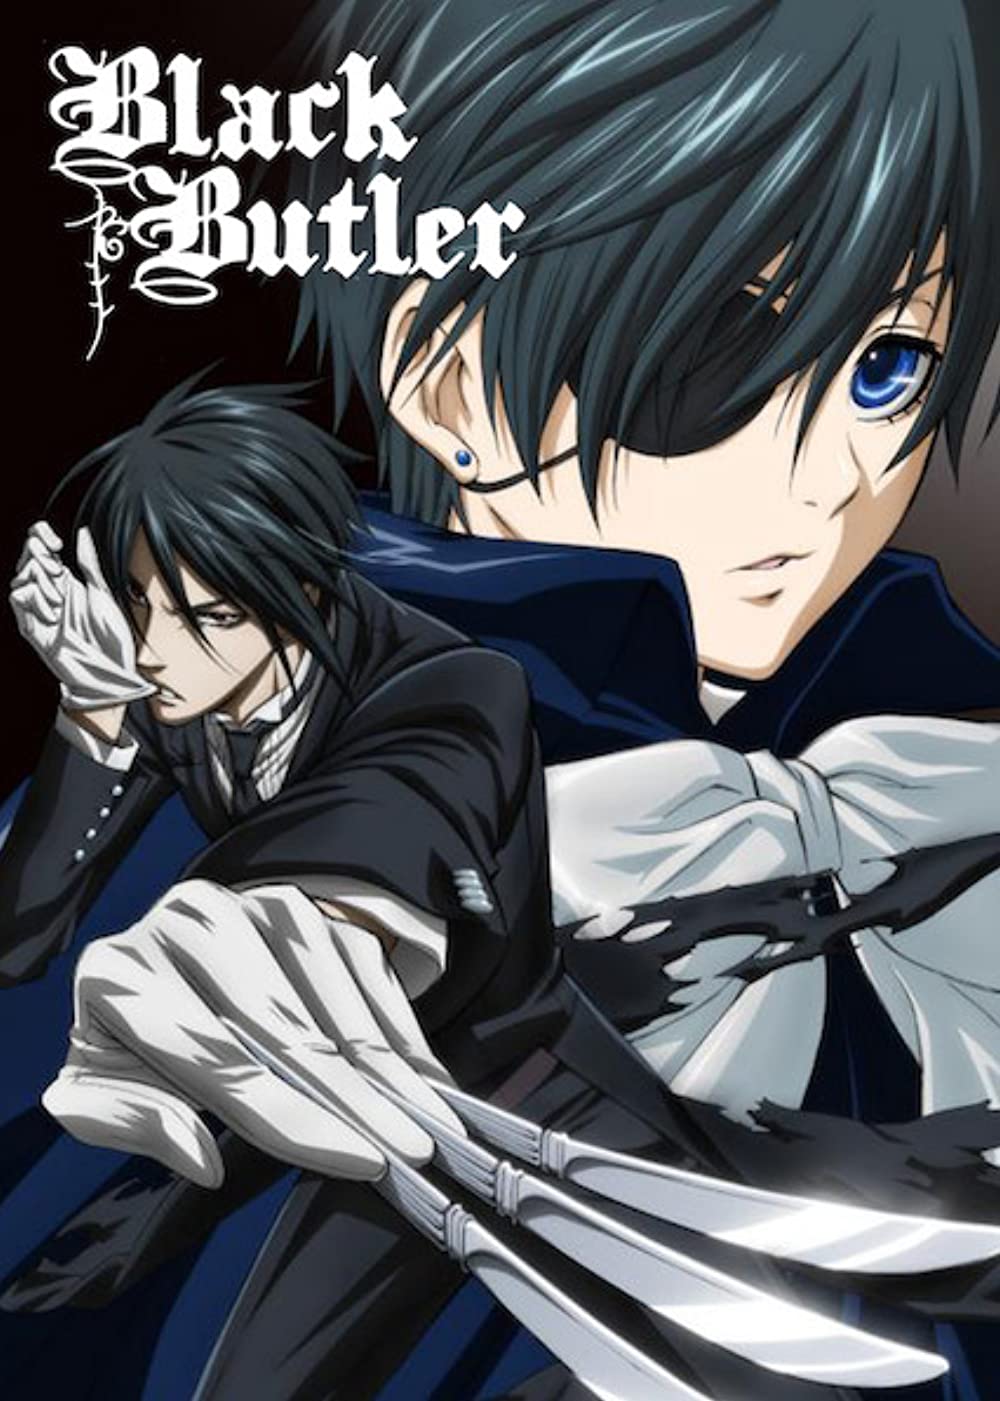 Gambar Black Butler - KibrisPDR